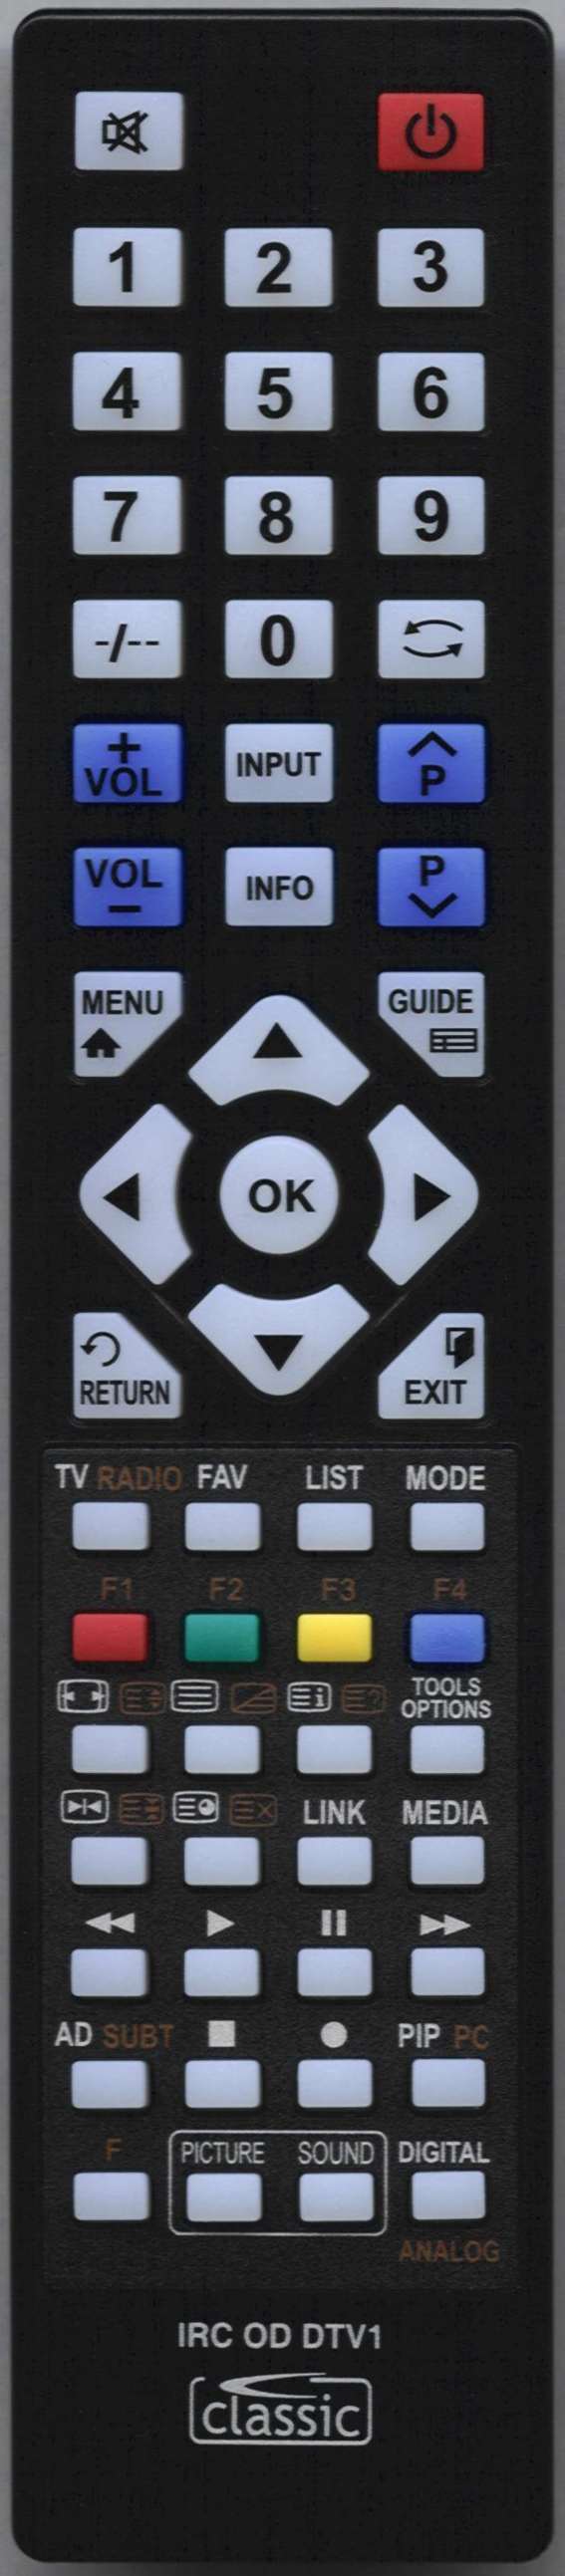 ORION TV26PW165DVD Remote Control